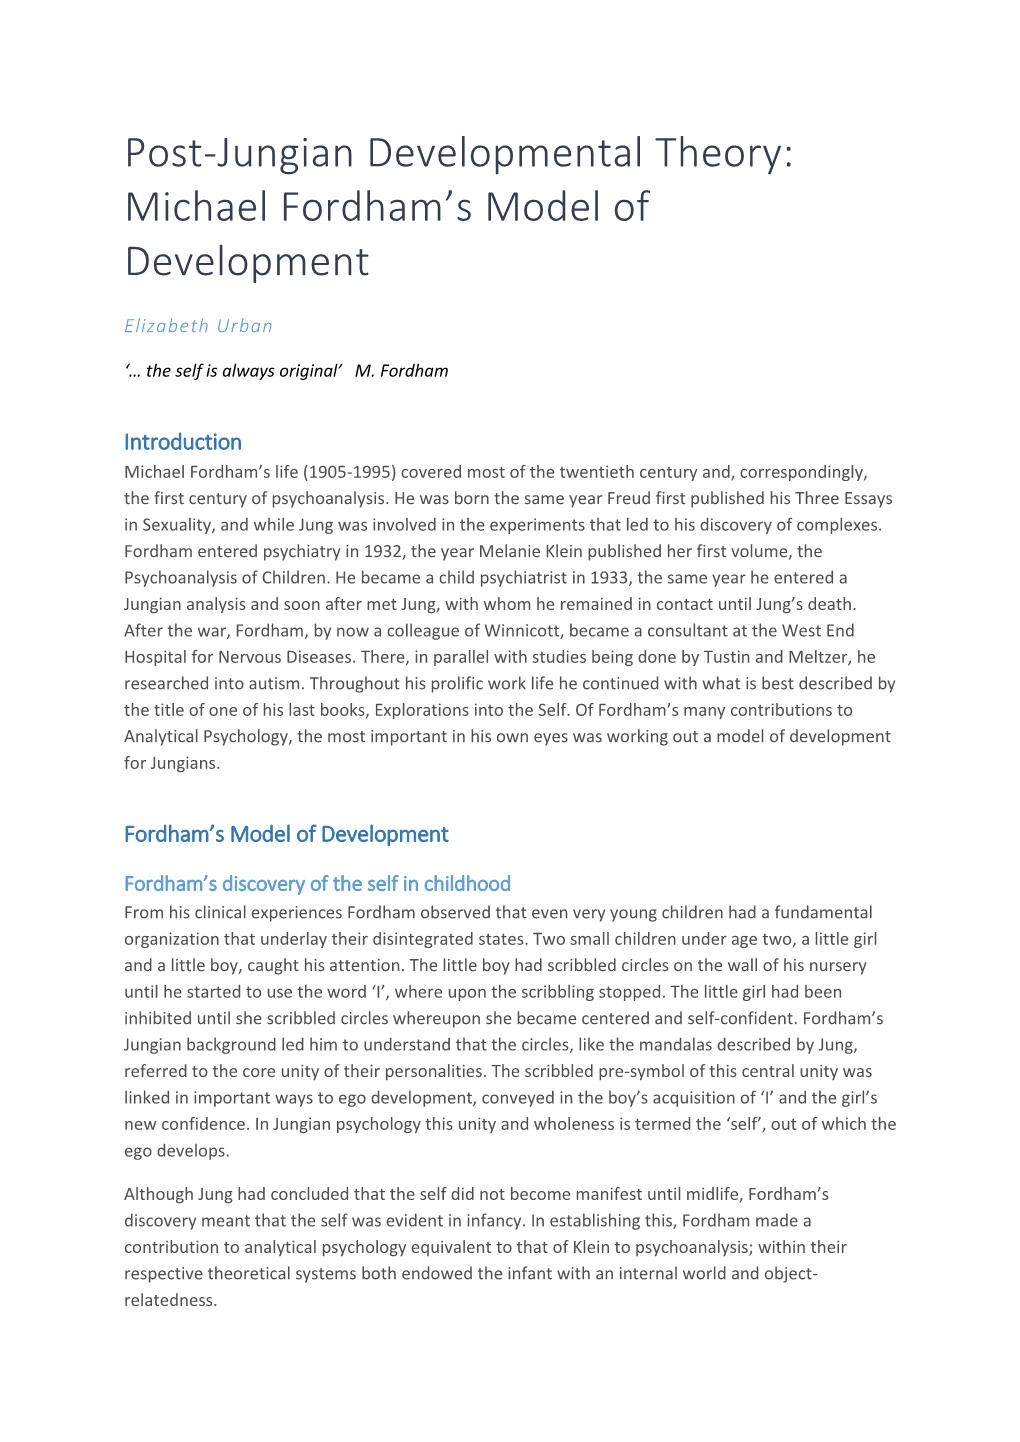 Post-Jungian Developmental Theory: Michael Fordham's Model of Development